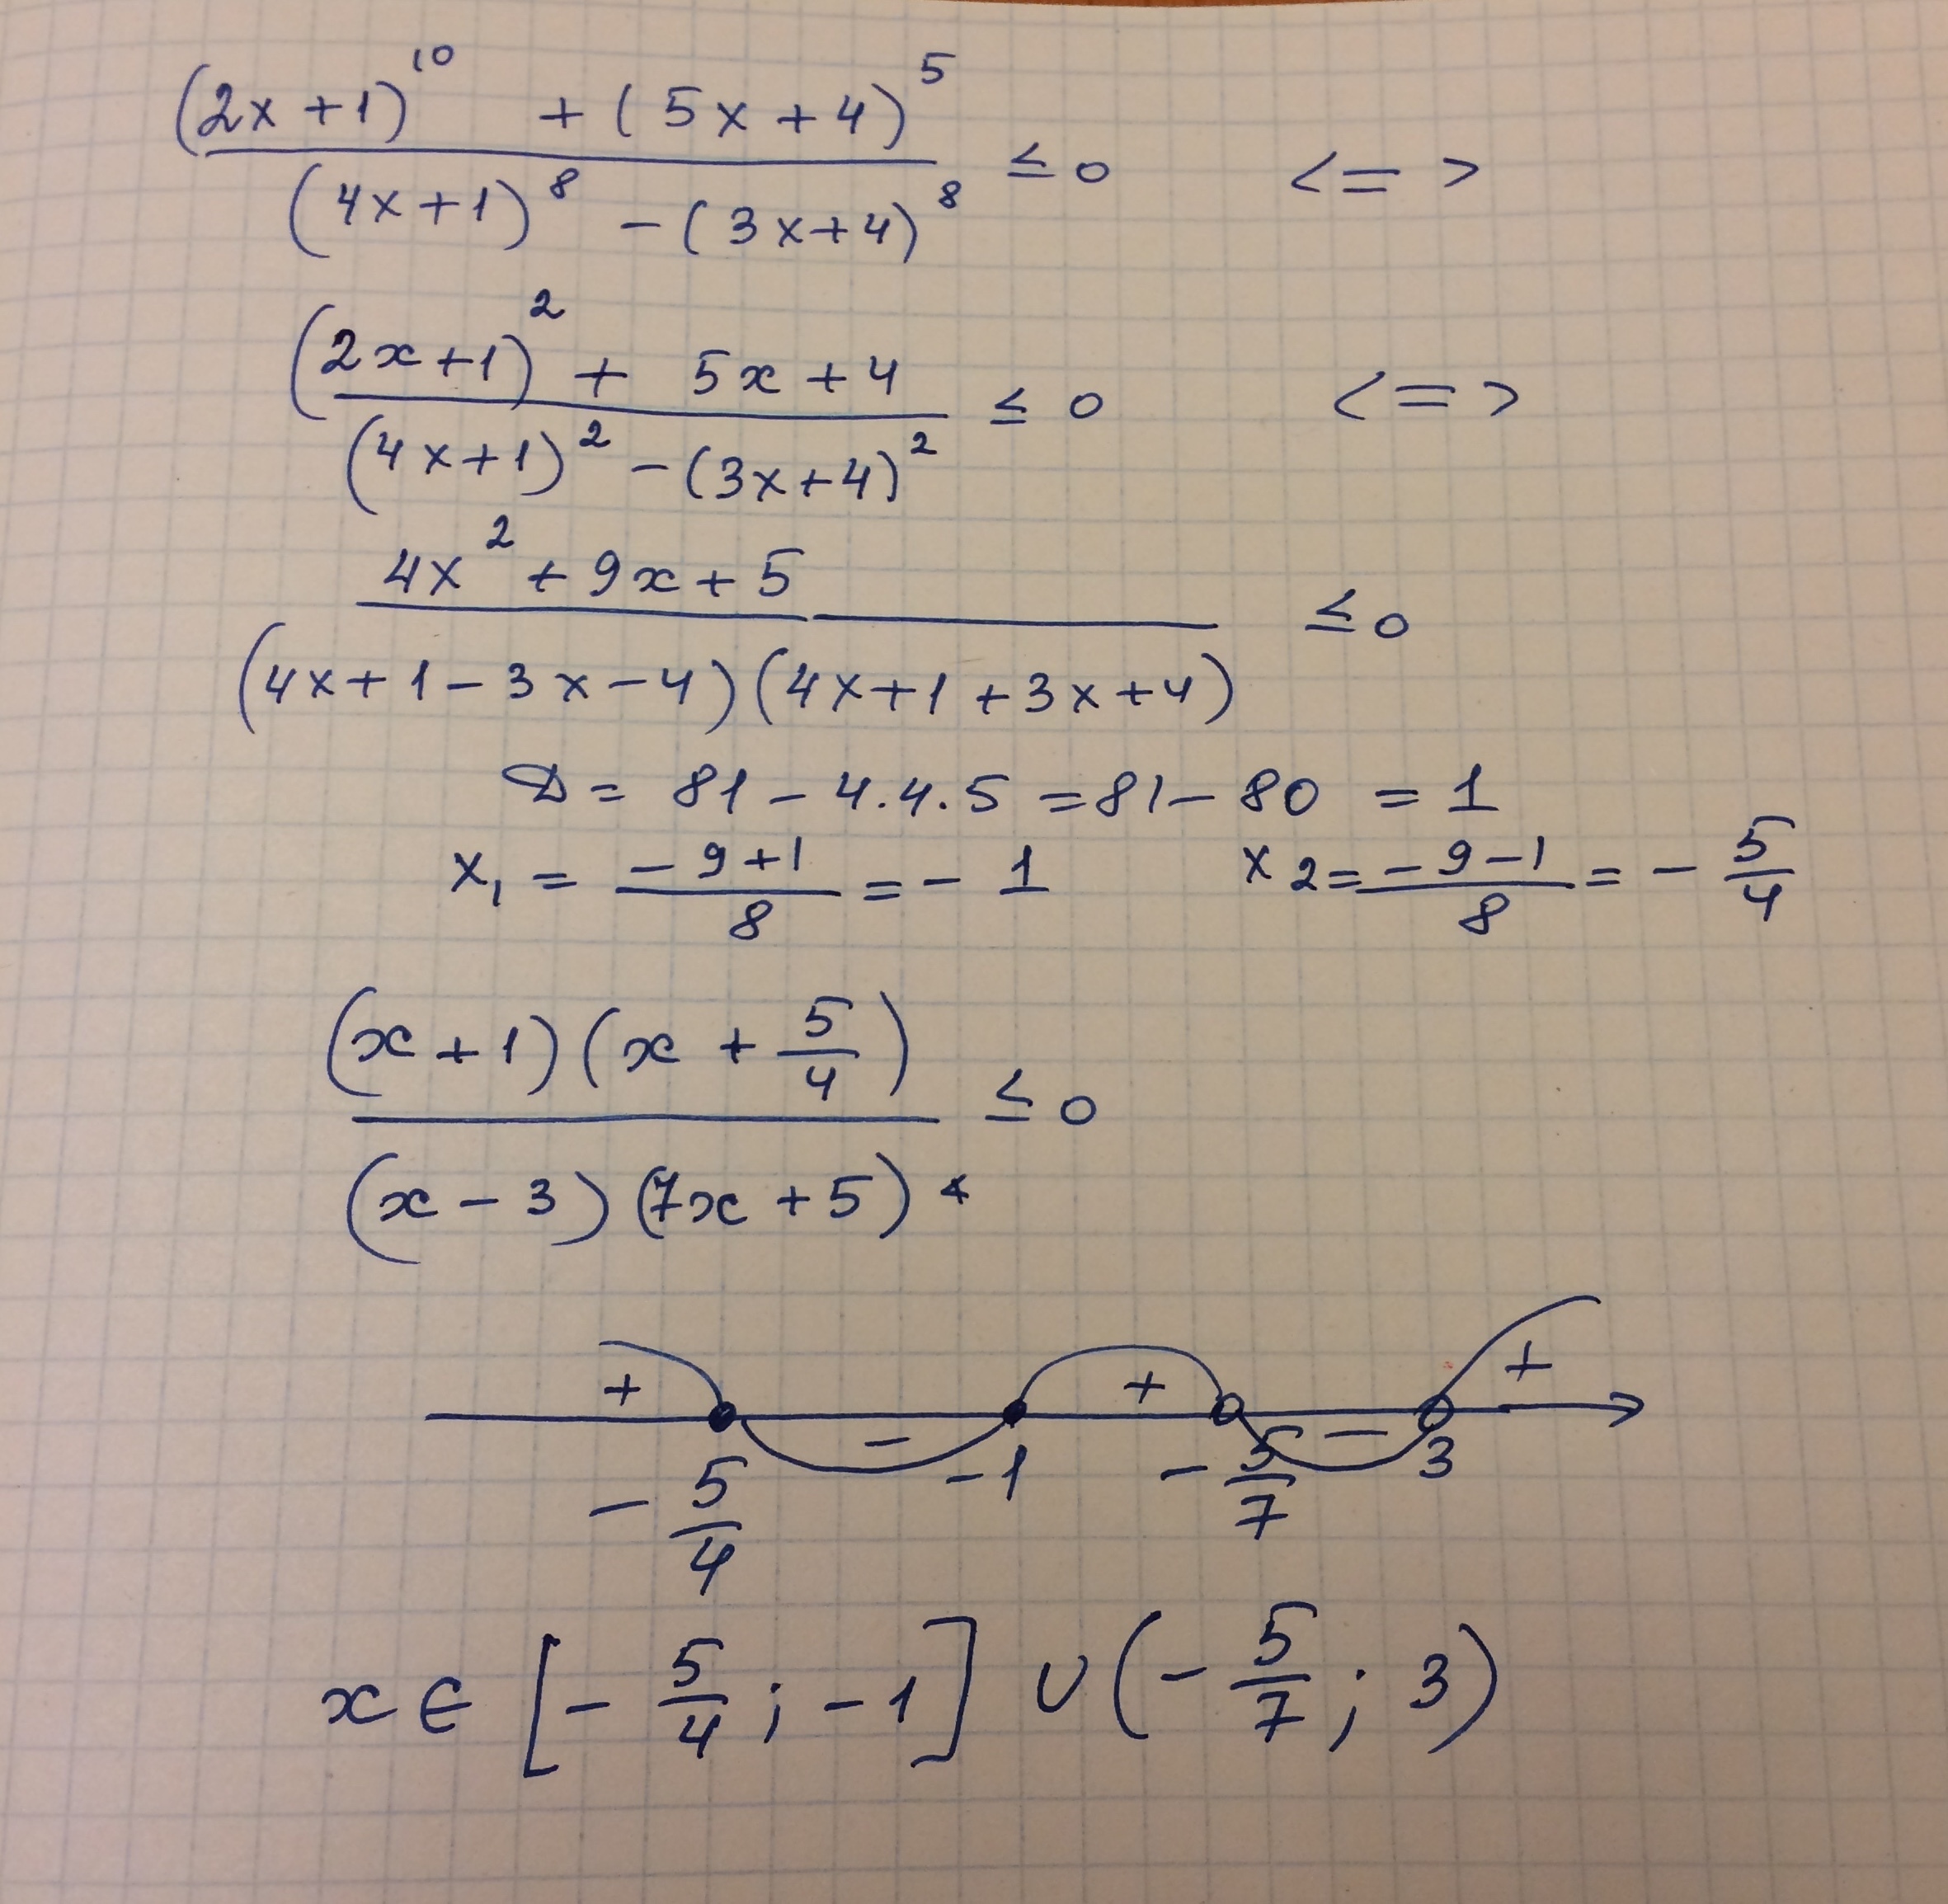 1 7 x 2x 19. Метод интервалов (x-5)/(x+1,5)<=0. (X-2)(X-5)>0 метод интервалов. X2<-6x-5 метод интервалов. Решить неравенство методом интервалов (x+1)(x-3)^2>0.